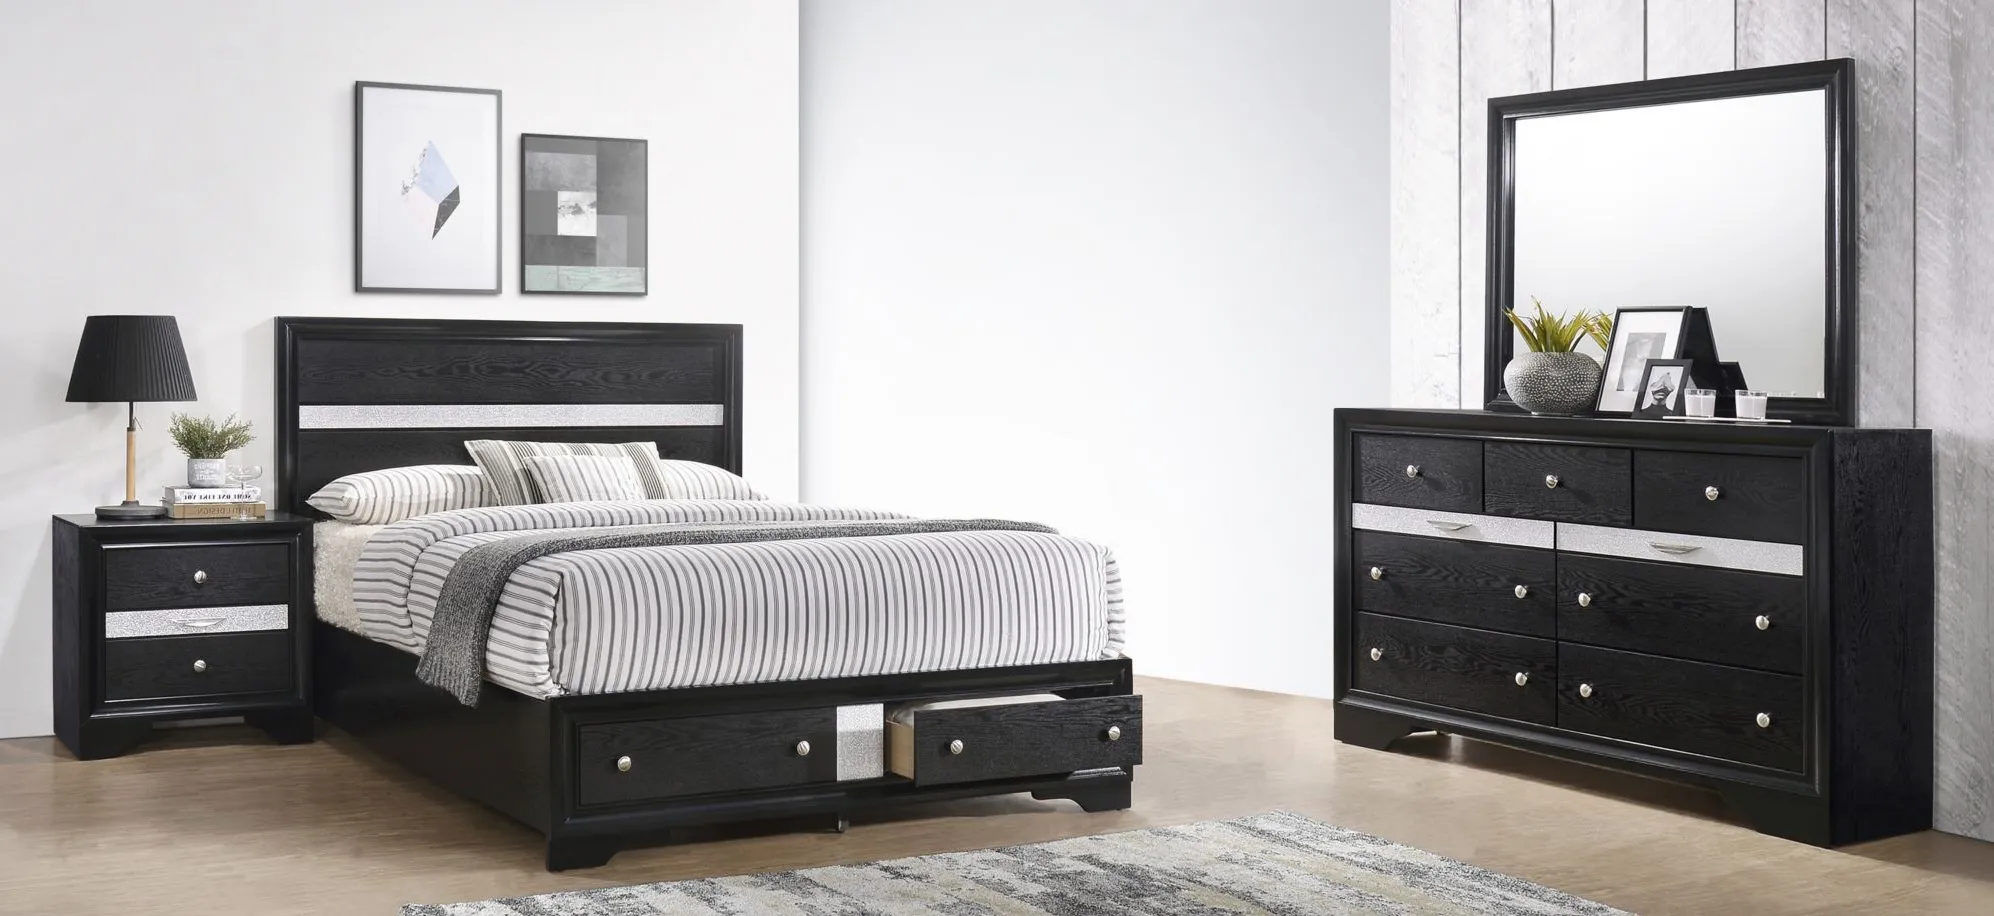 Regata 4-pc. Bedroom Set w/Storage Bed in Black/Silver by Crown Mark